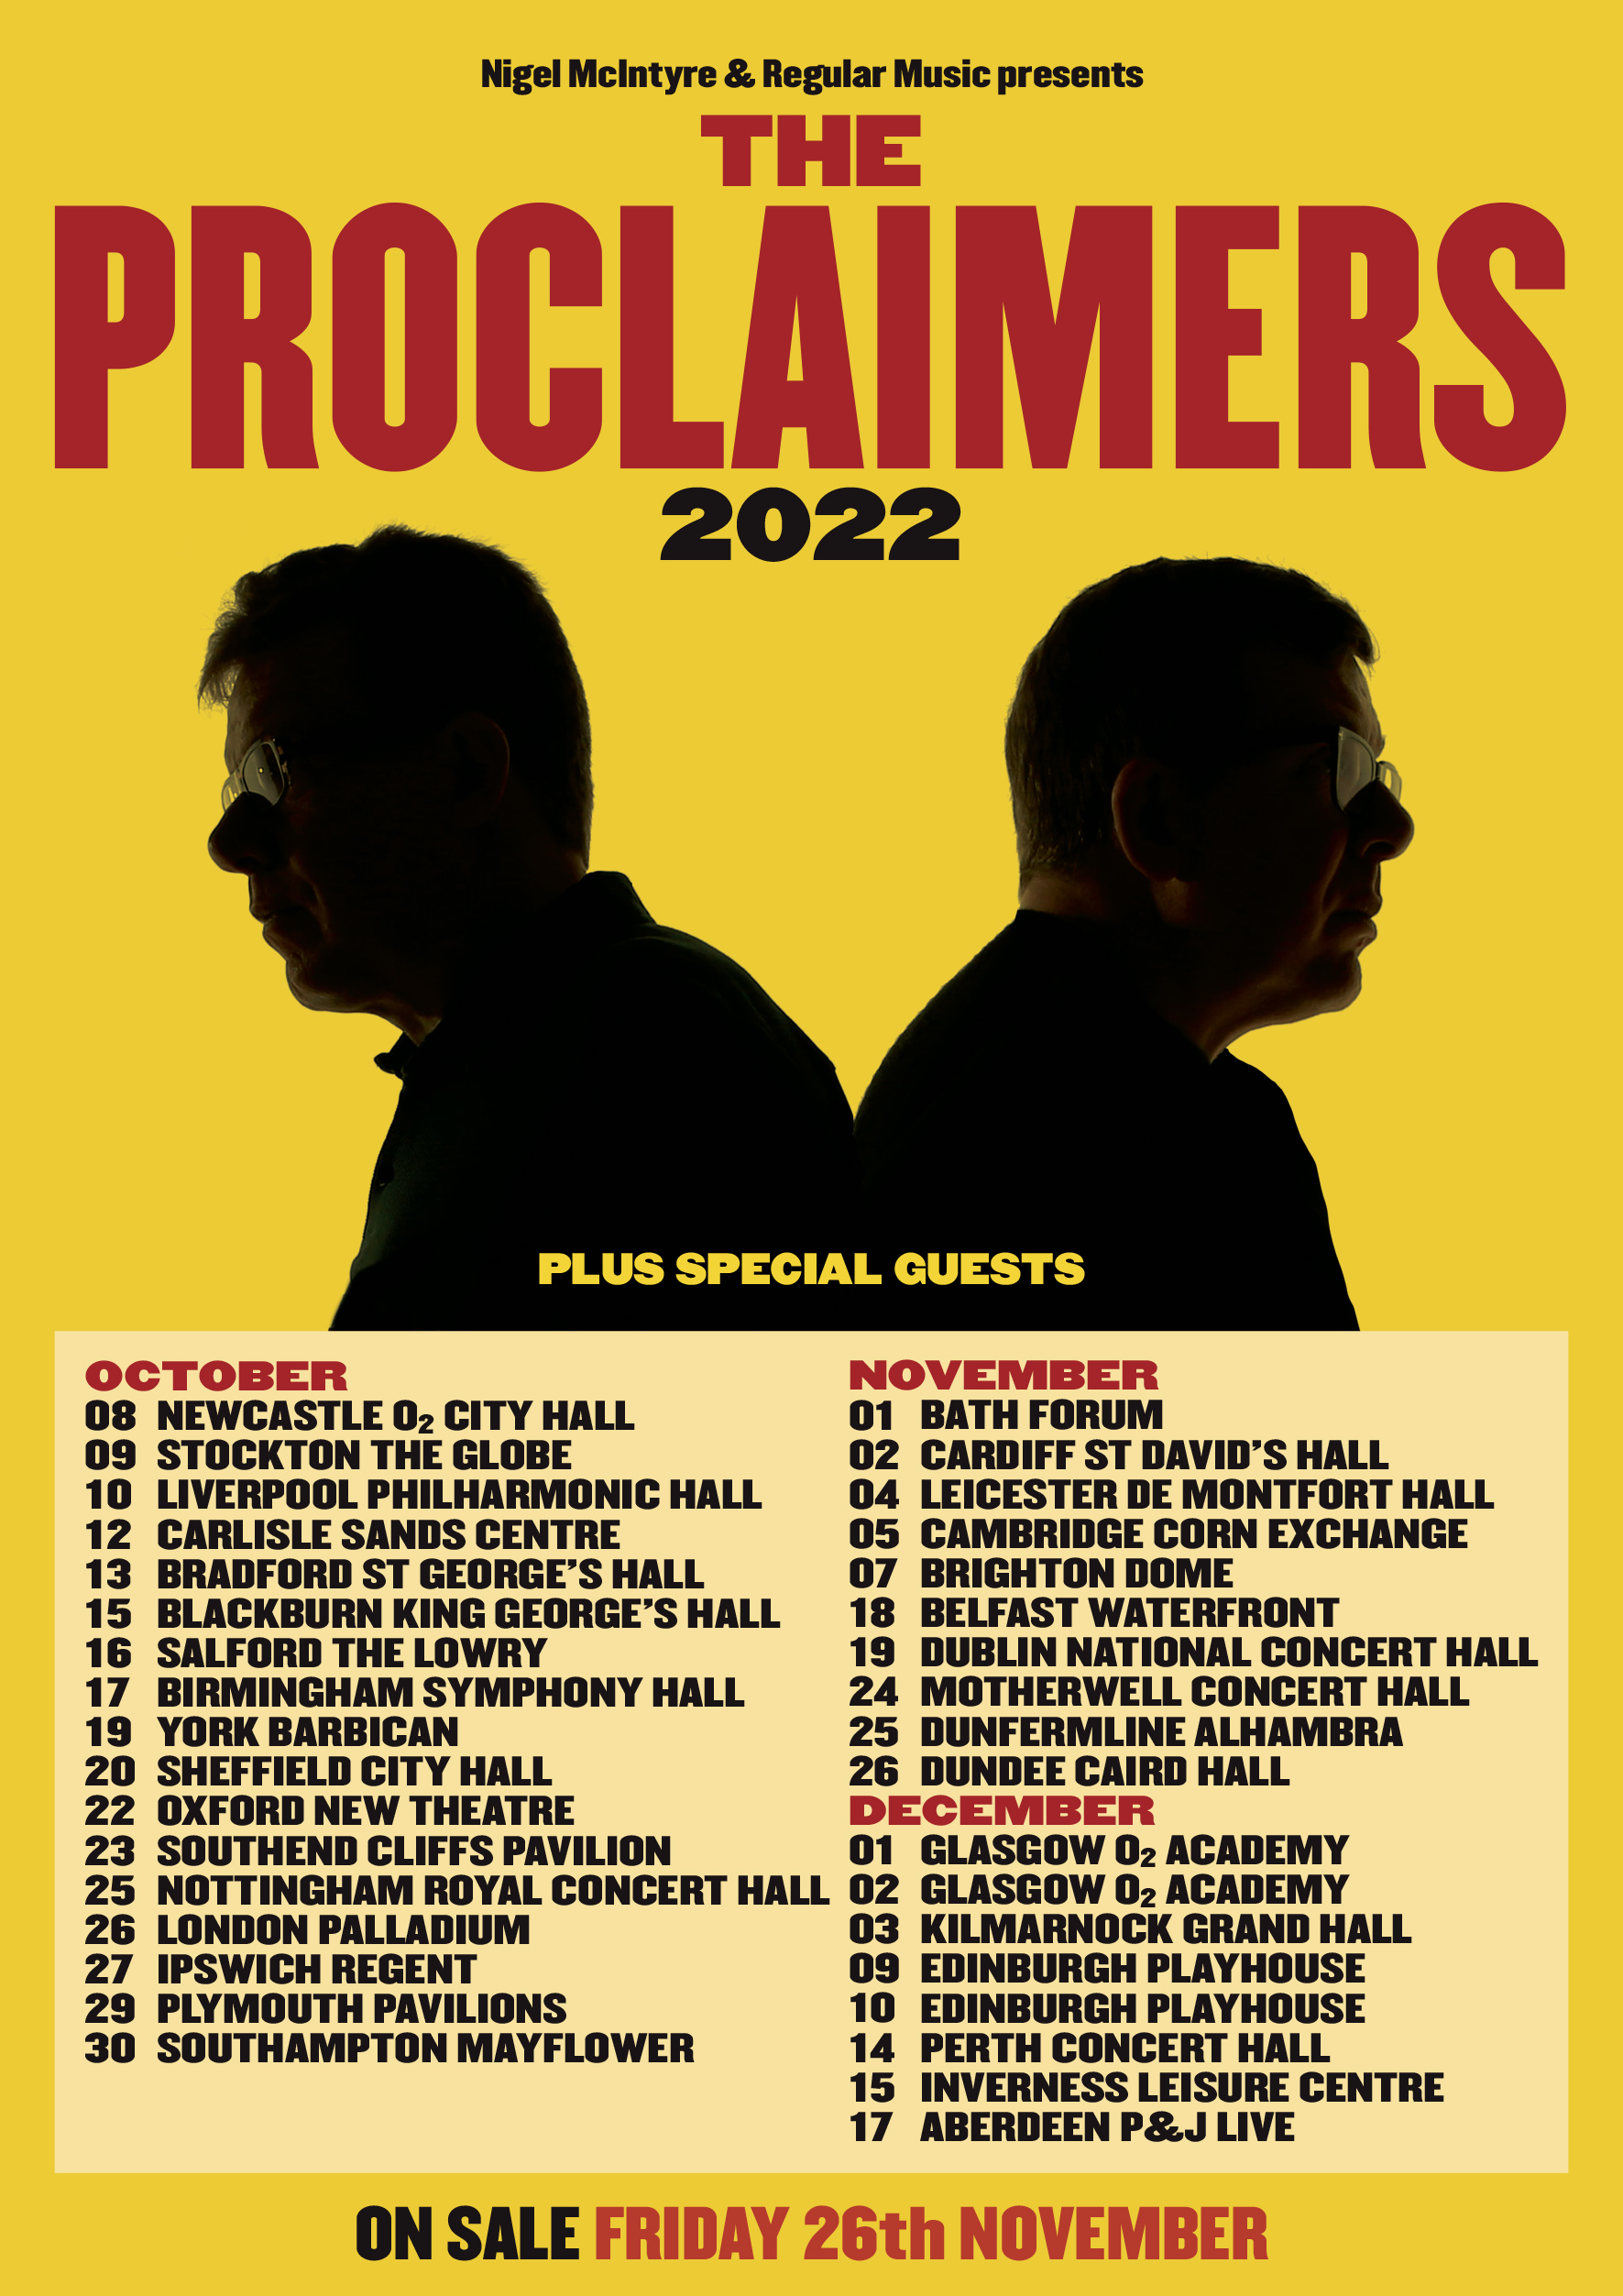 proclaimers tour 2023 belfast